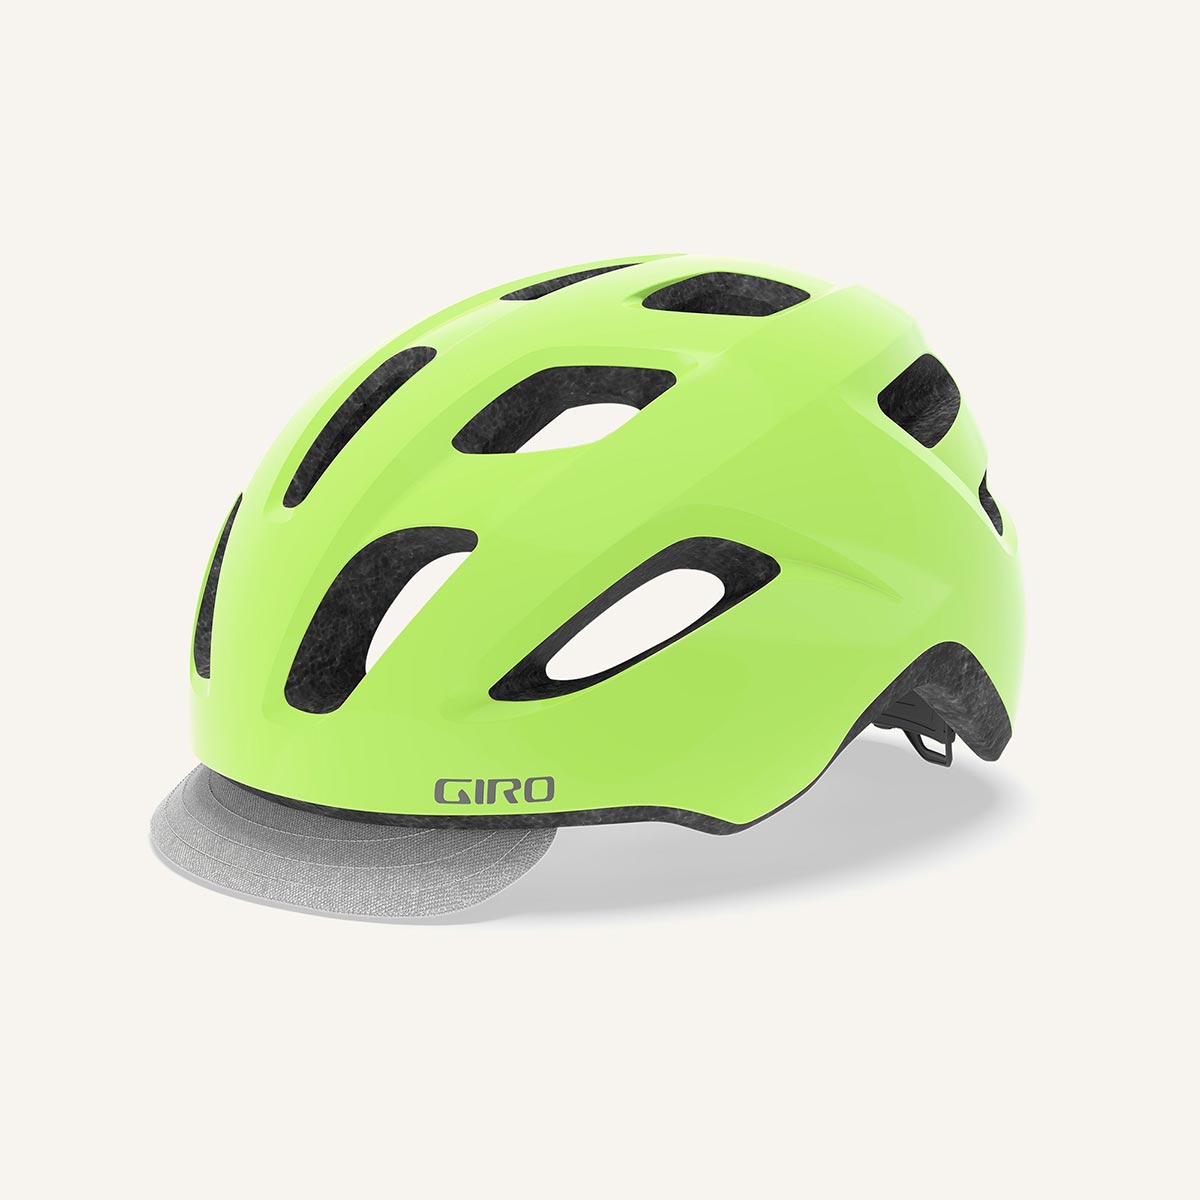 highlight-yellow-giro-trella-womens-electric-bike-helmet